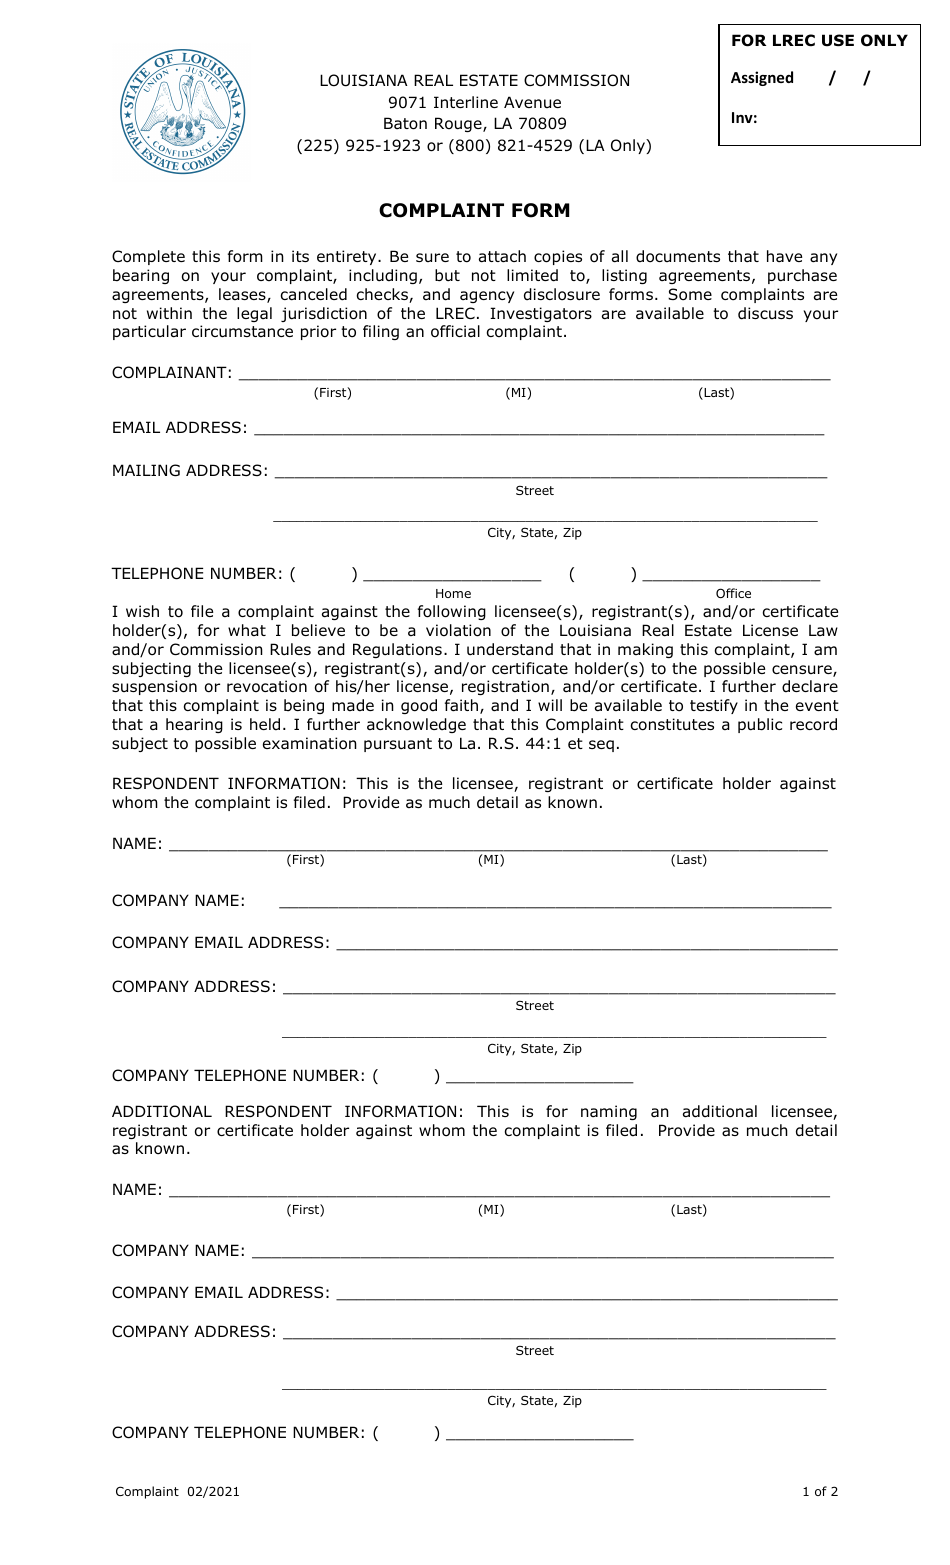 Complaint Form - Louisiana, Page 1